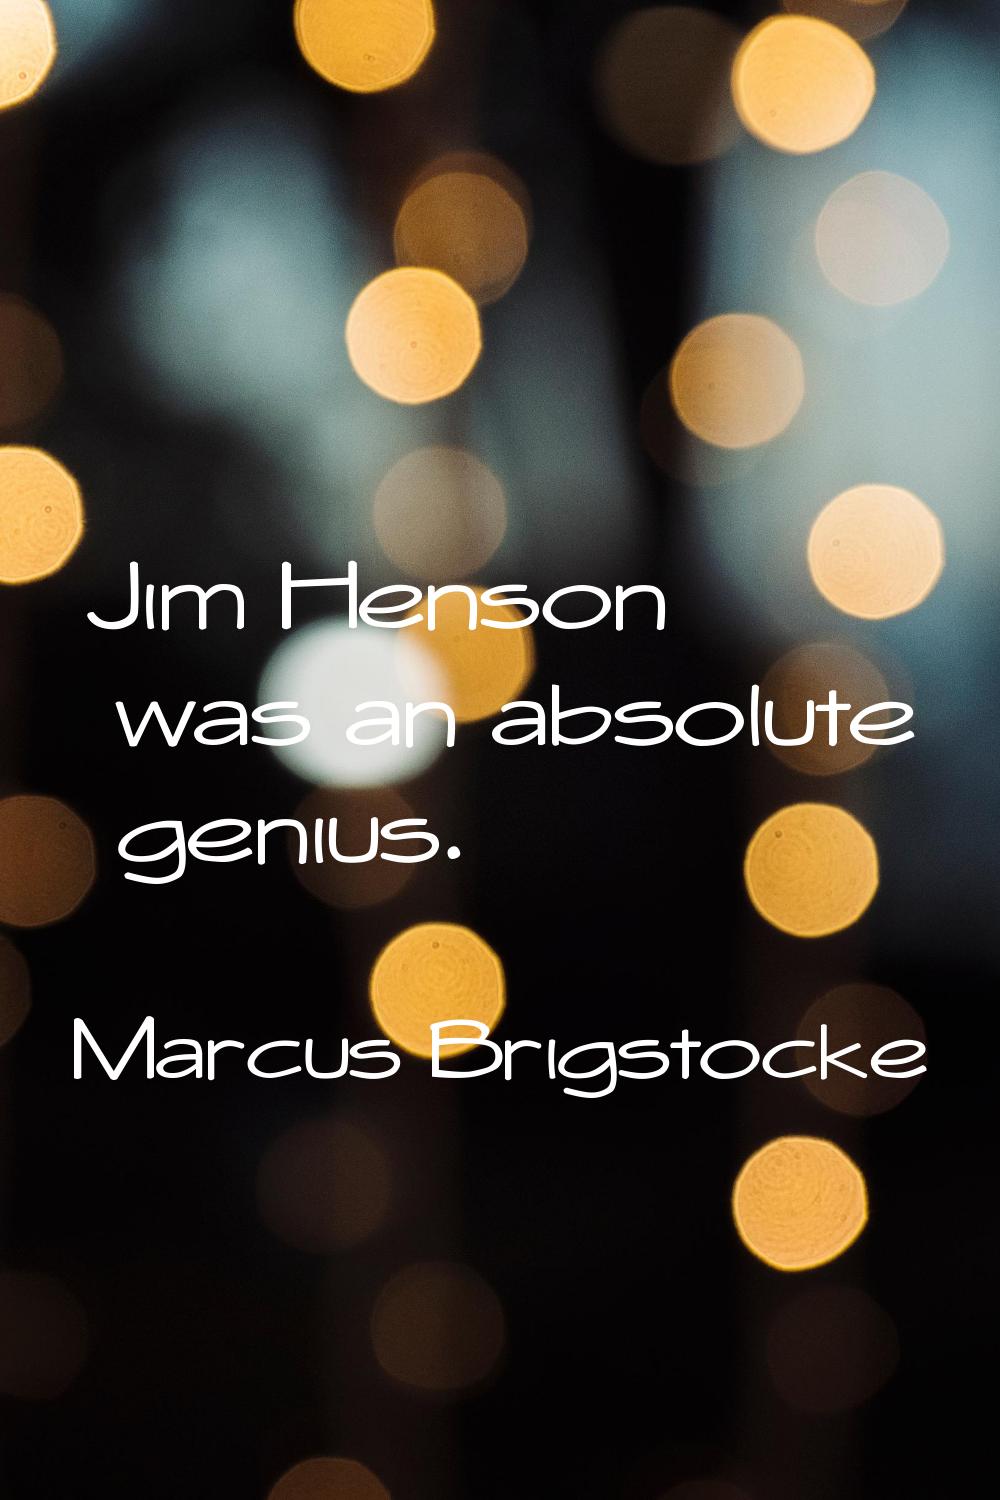 Jim Henson was an absolute genius.